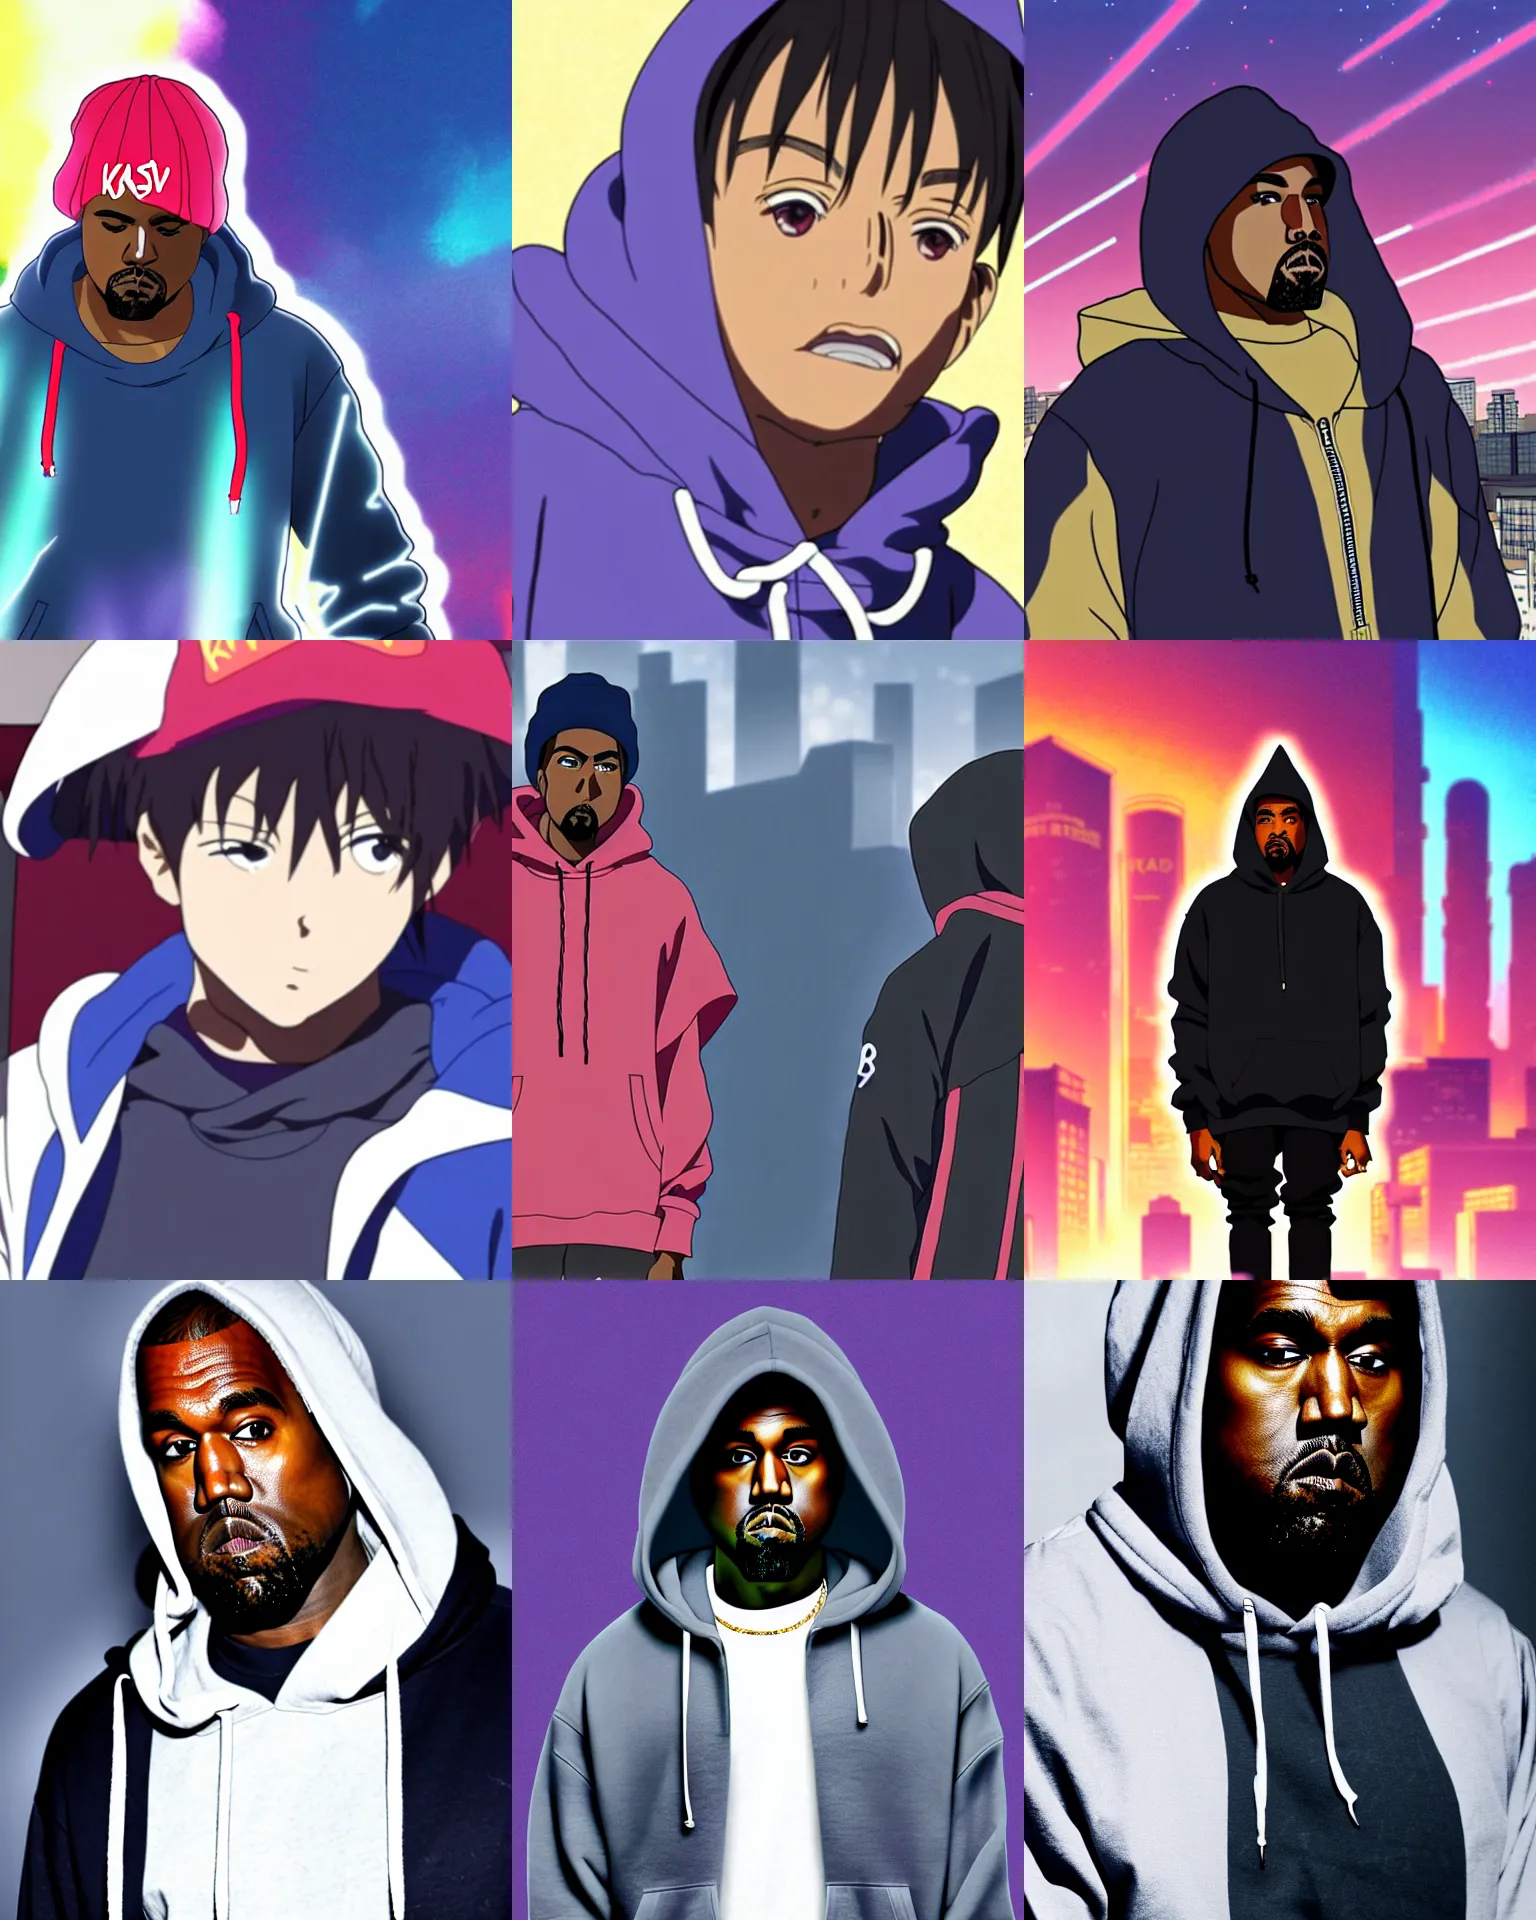 How An Anime Movie Influenced Kanye West and Stranger Things  by  Crunchyroll  Crunchyroll  Medium